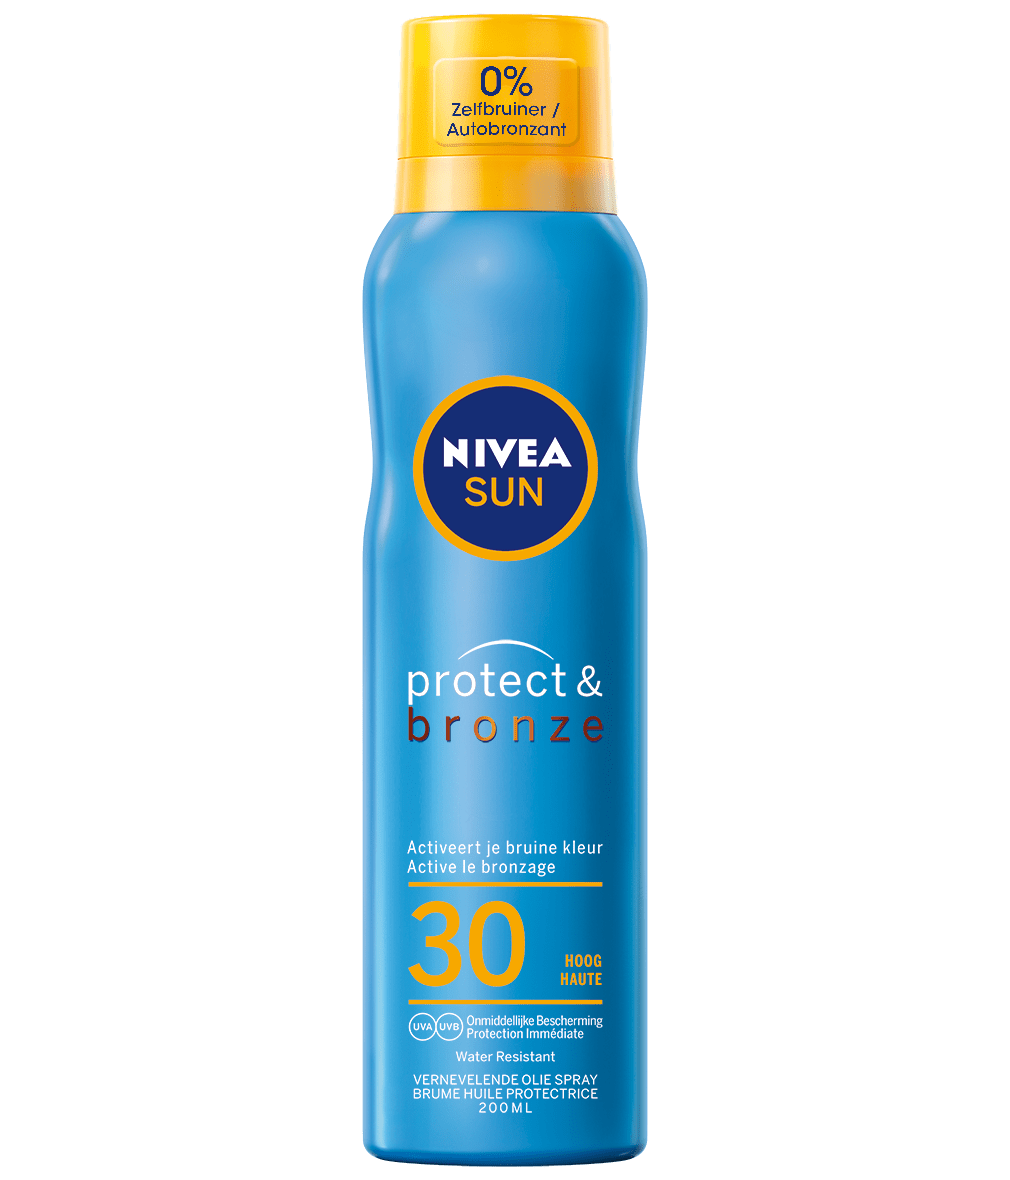 Sun Protection - Sun Creams, Sprays & Bronzing Oils